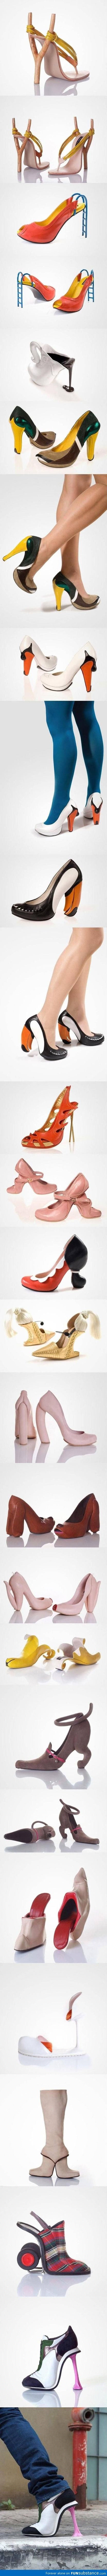 Creative high heel designs